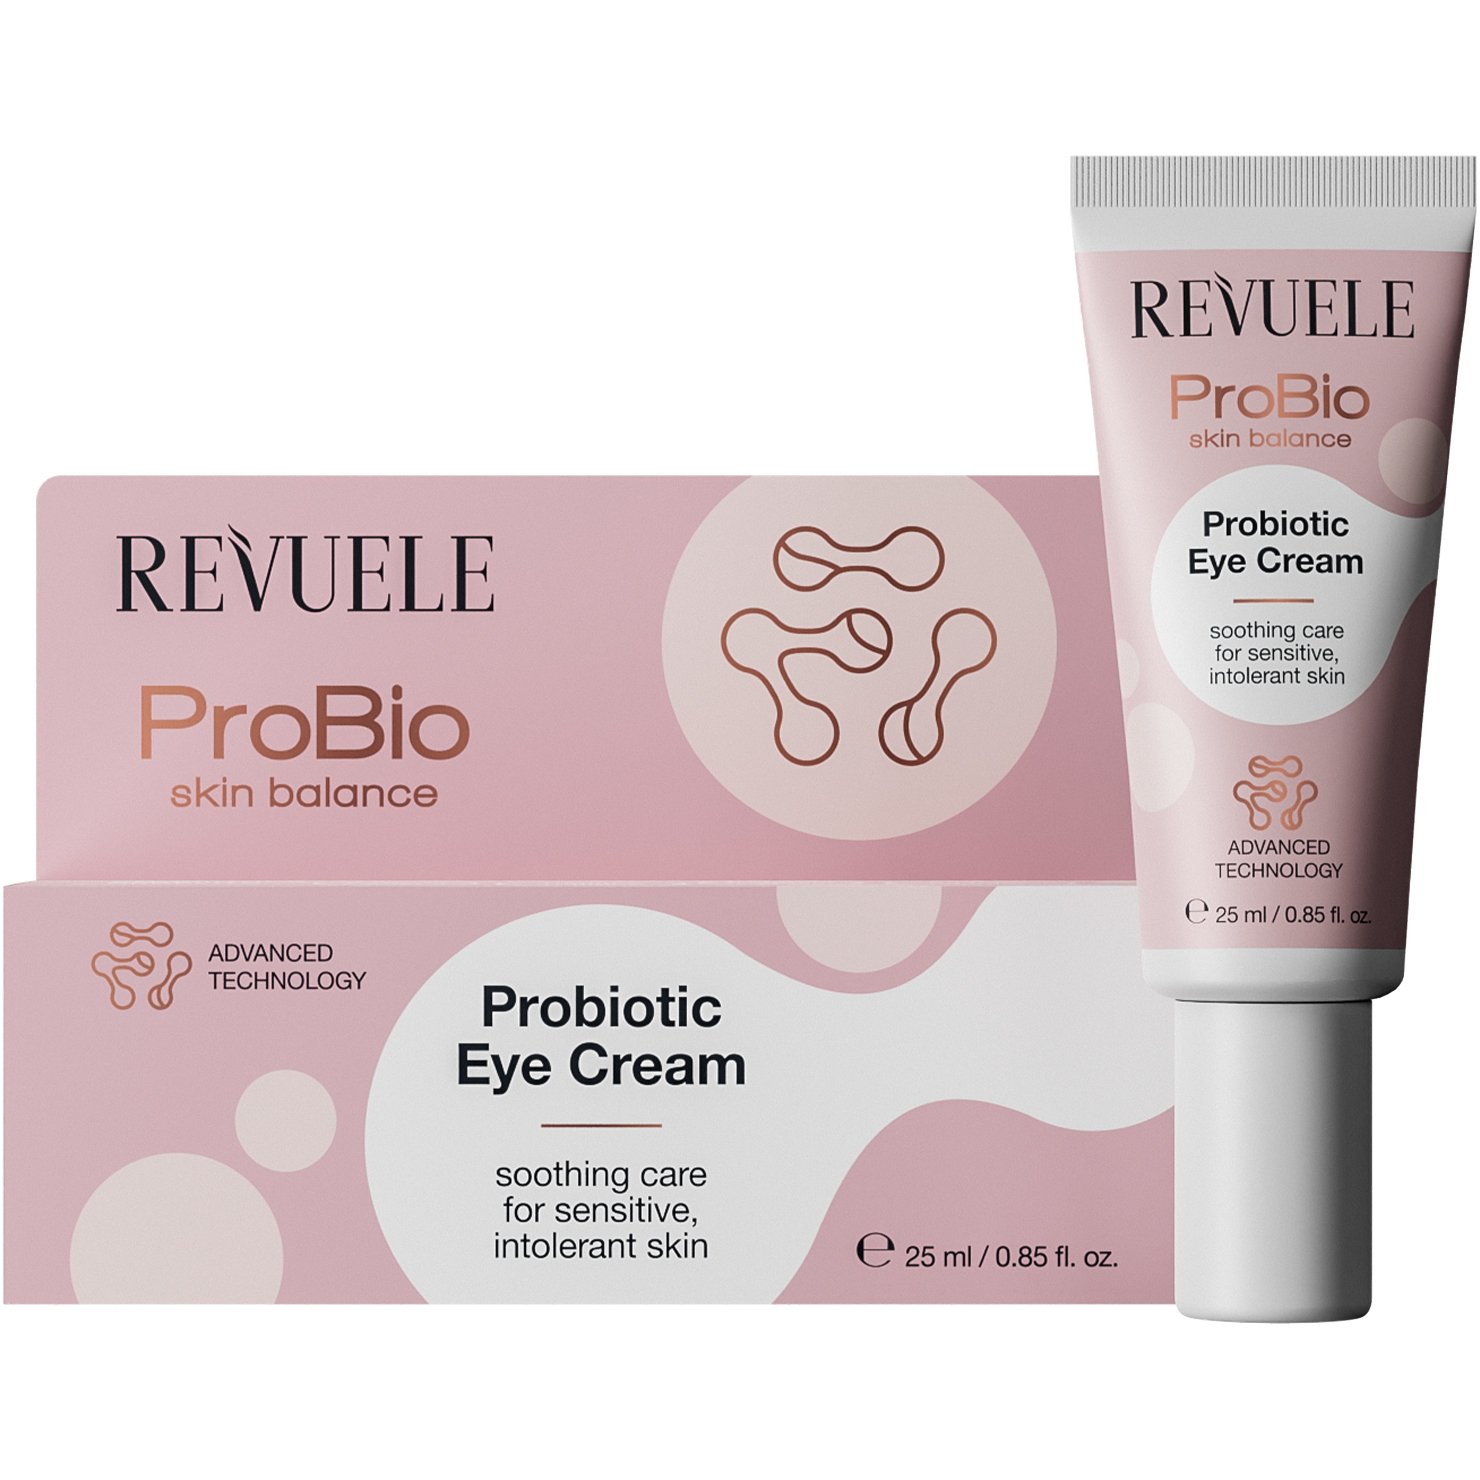 Крем для глаз Revuele Probio Skin Balance Probiotic Eye Cream, 25 мл - фото 1